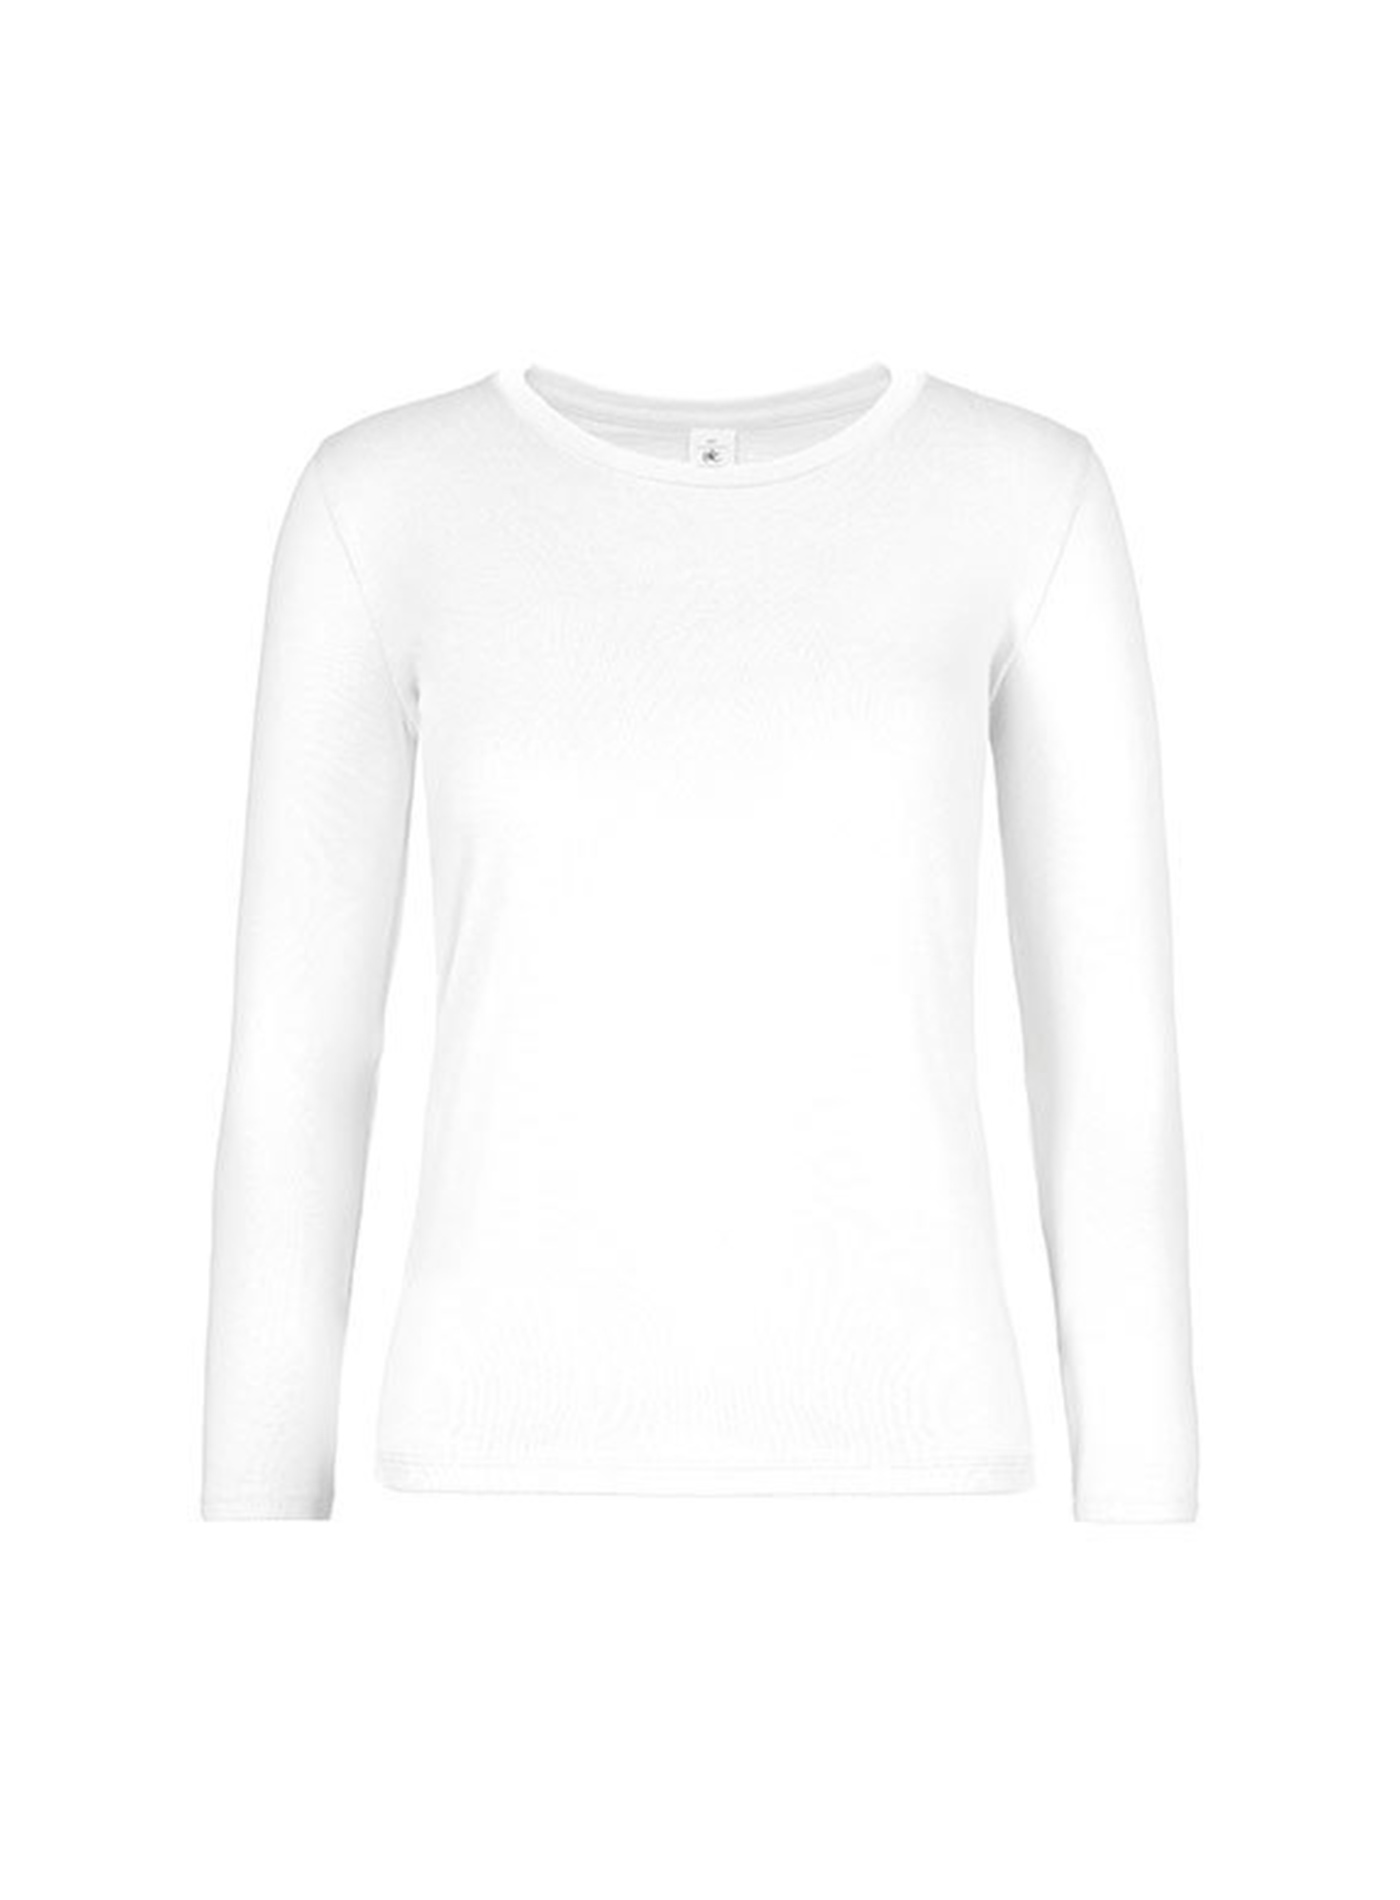 Dámské tričko s dlouhým rukávem B&C Collection - Bílá XL